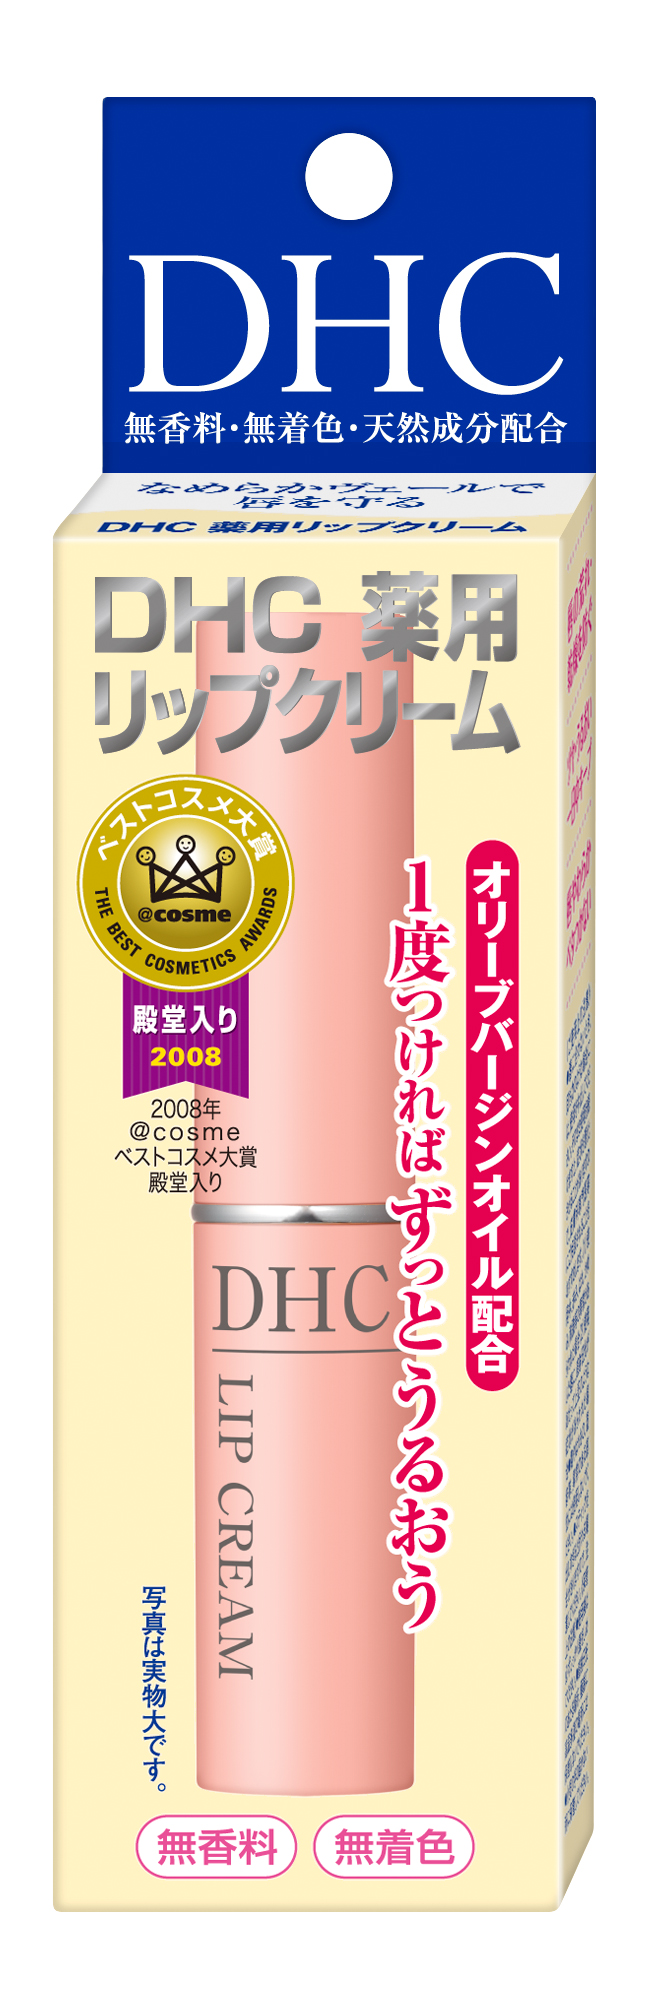 DHC橄榄护唇膏